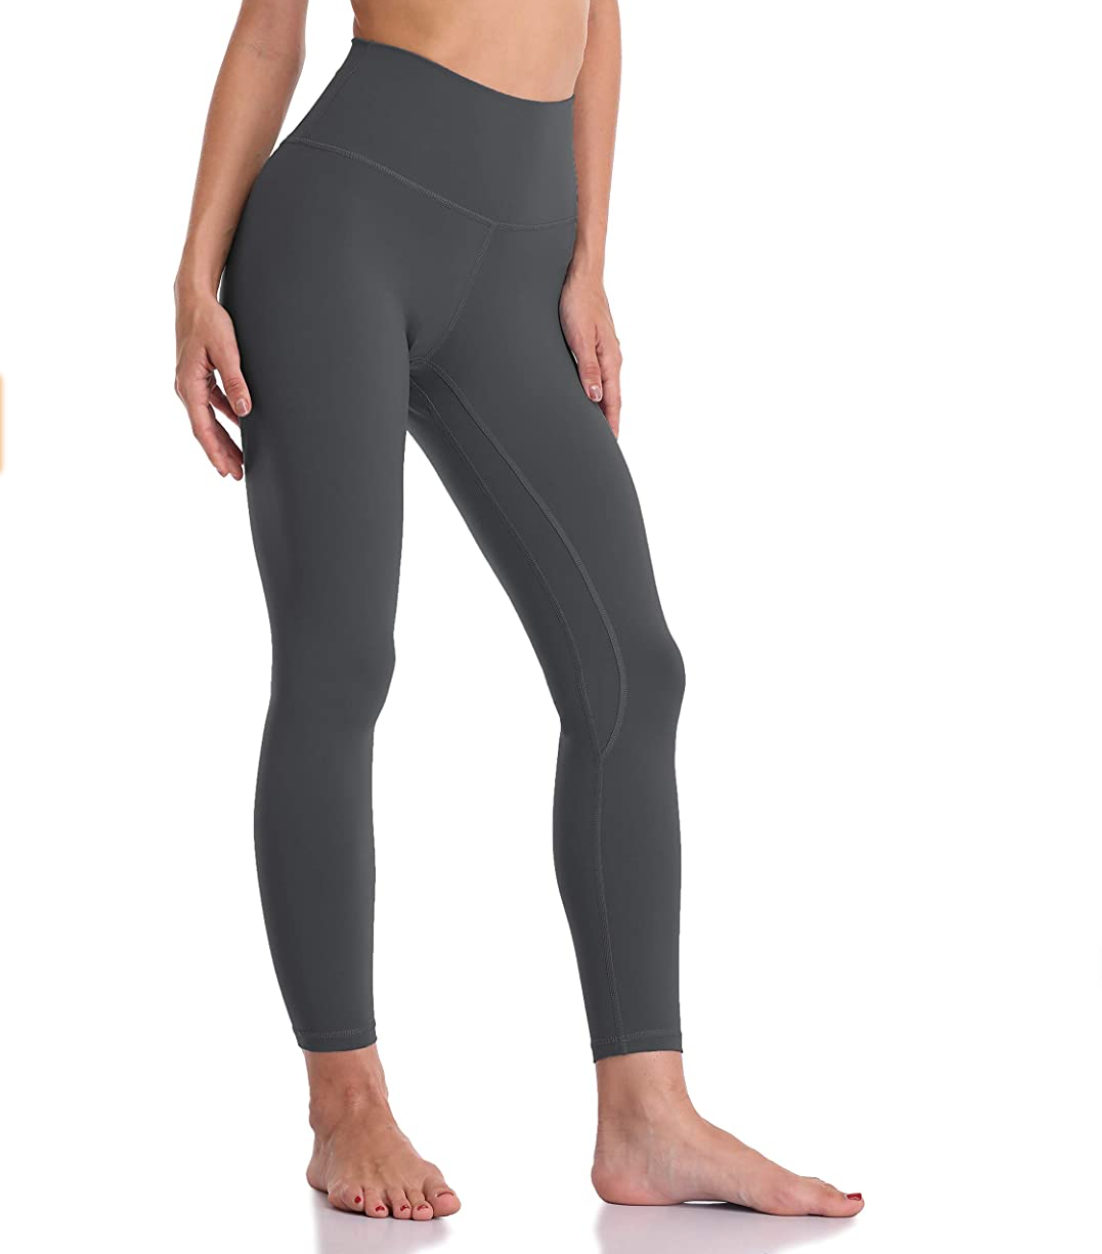 Amazingdeal Women Print Stripe Yoga Pants Fitness Sports High Waist Pull Up Leggings